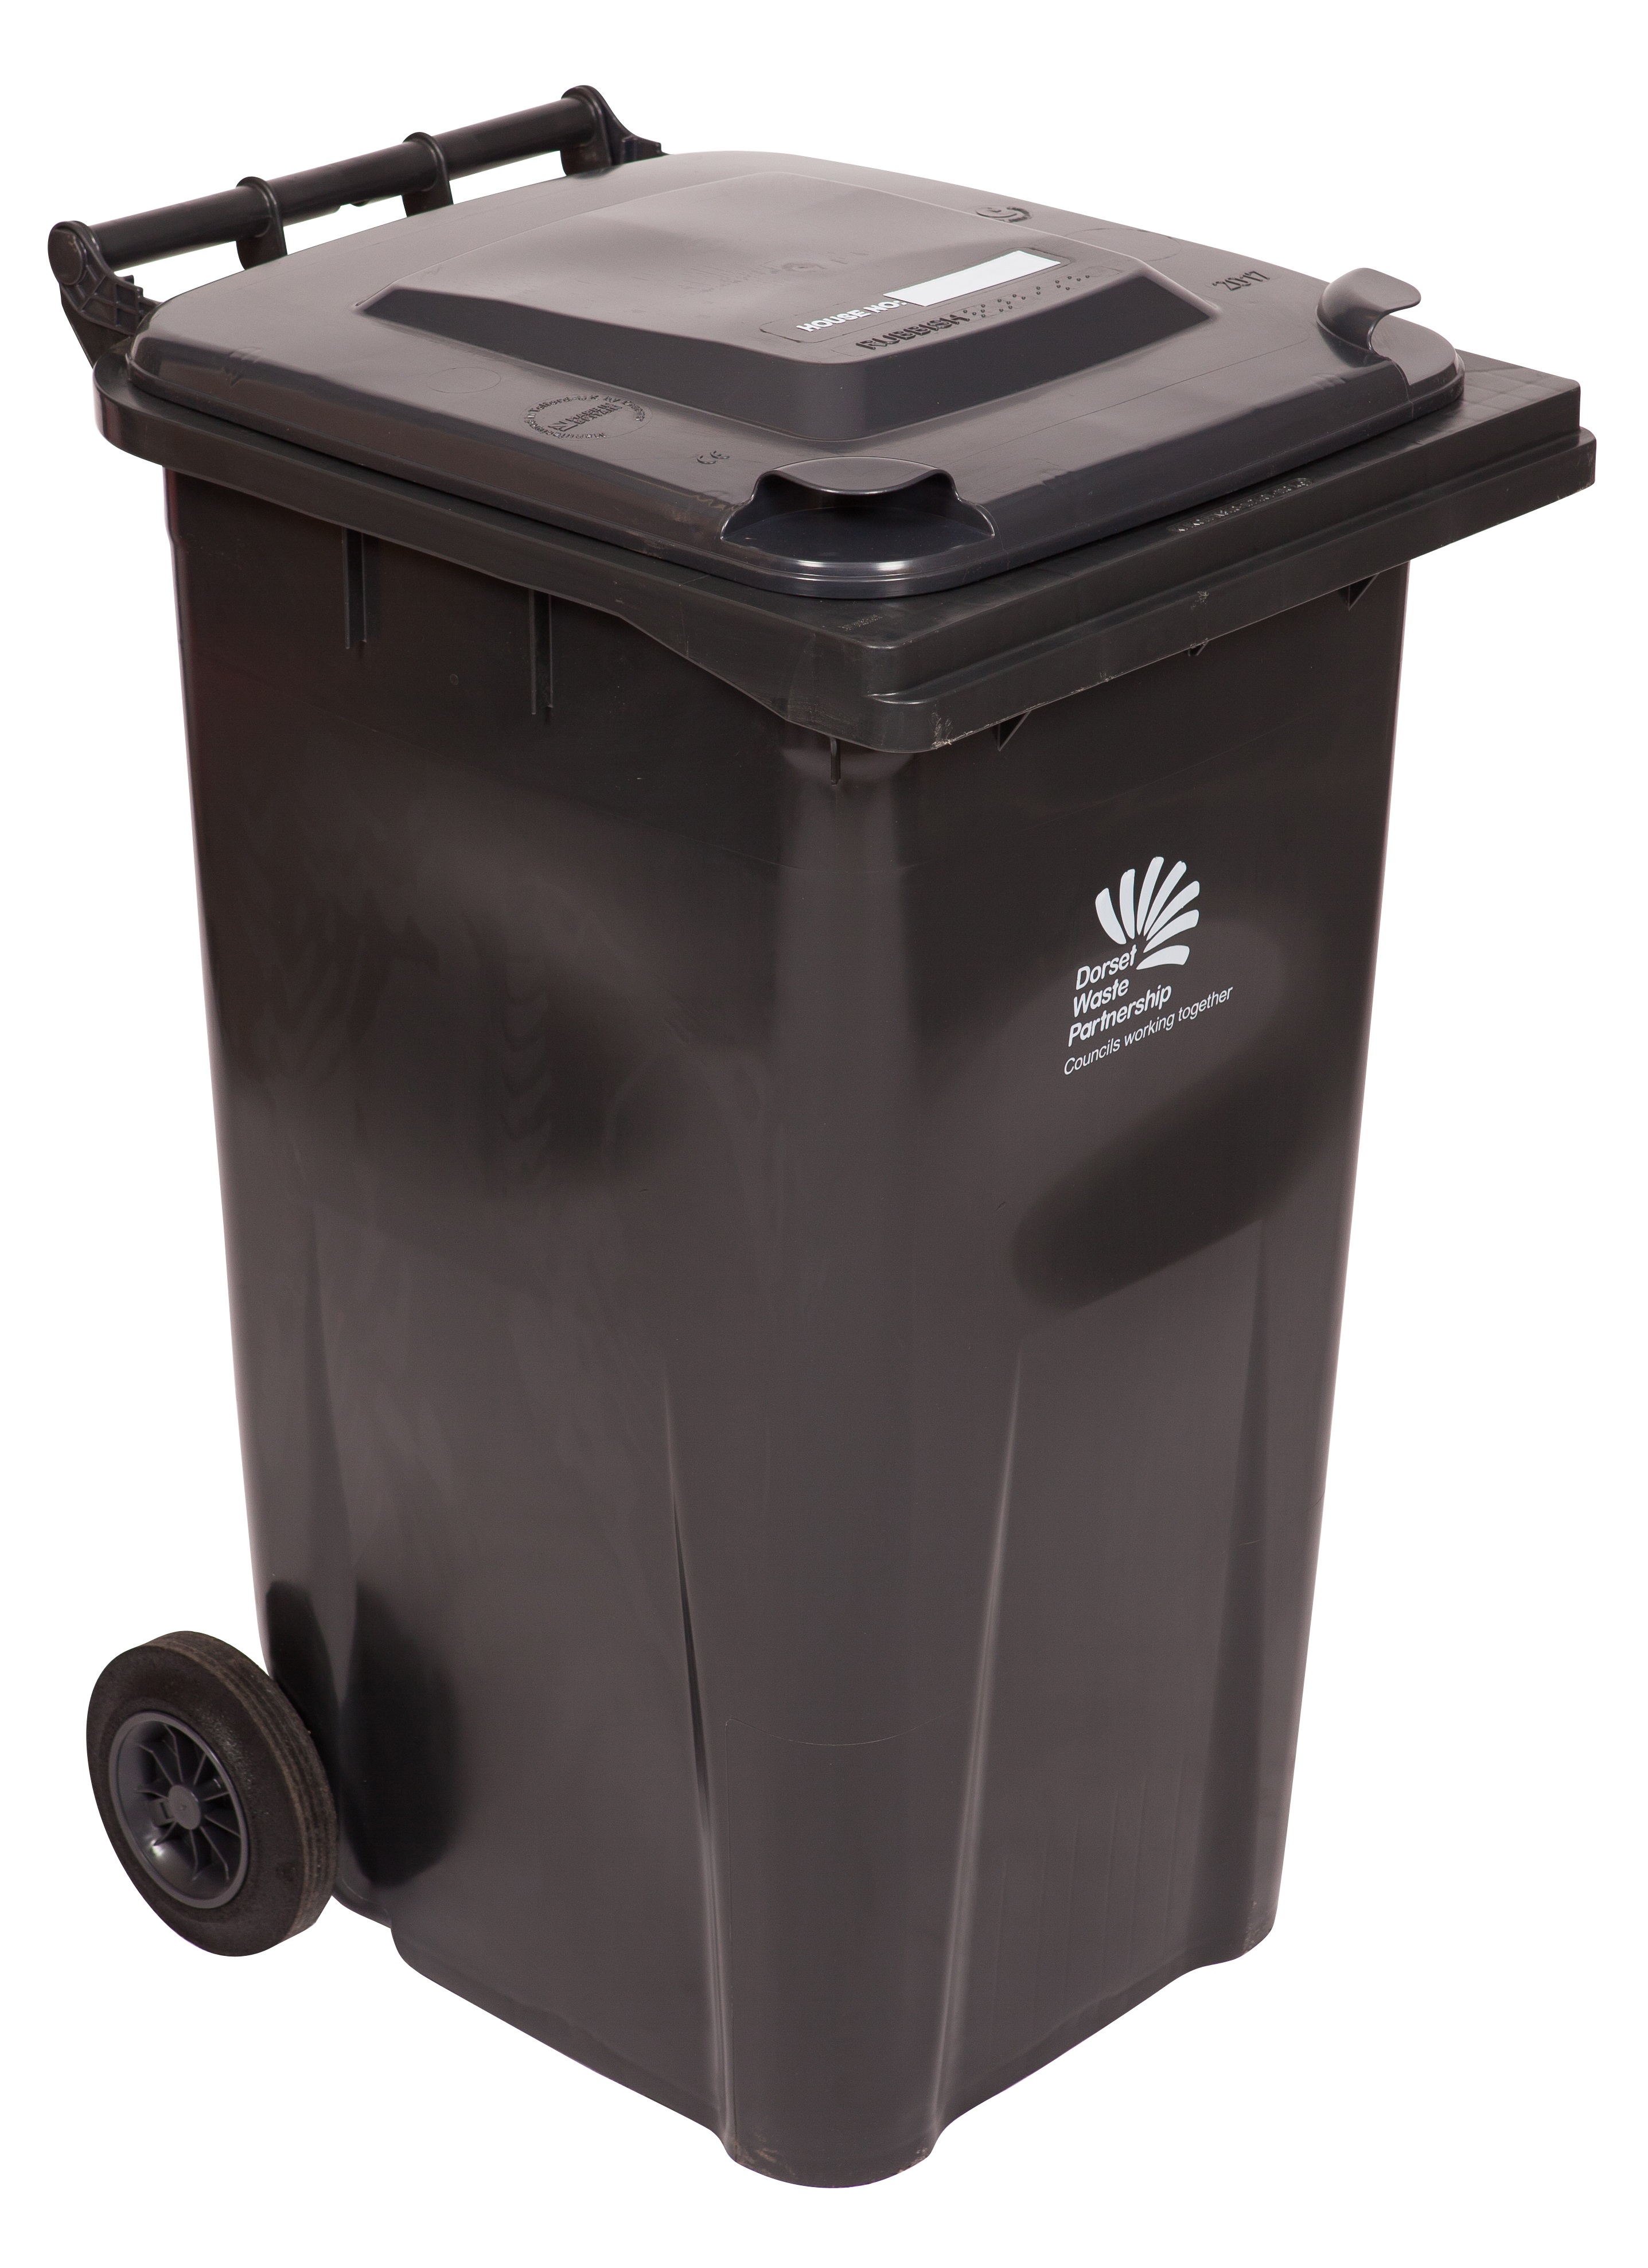 Recycle for Dorset bin - Standard rubbish bin